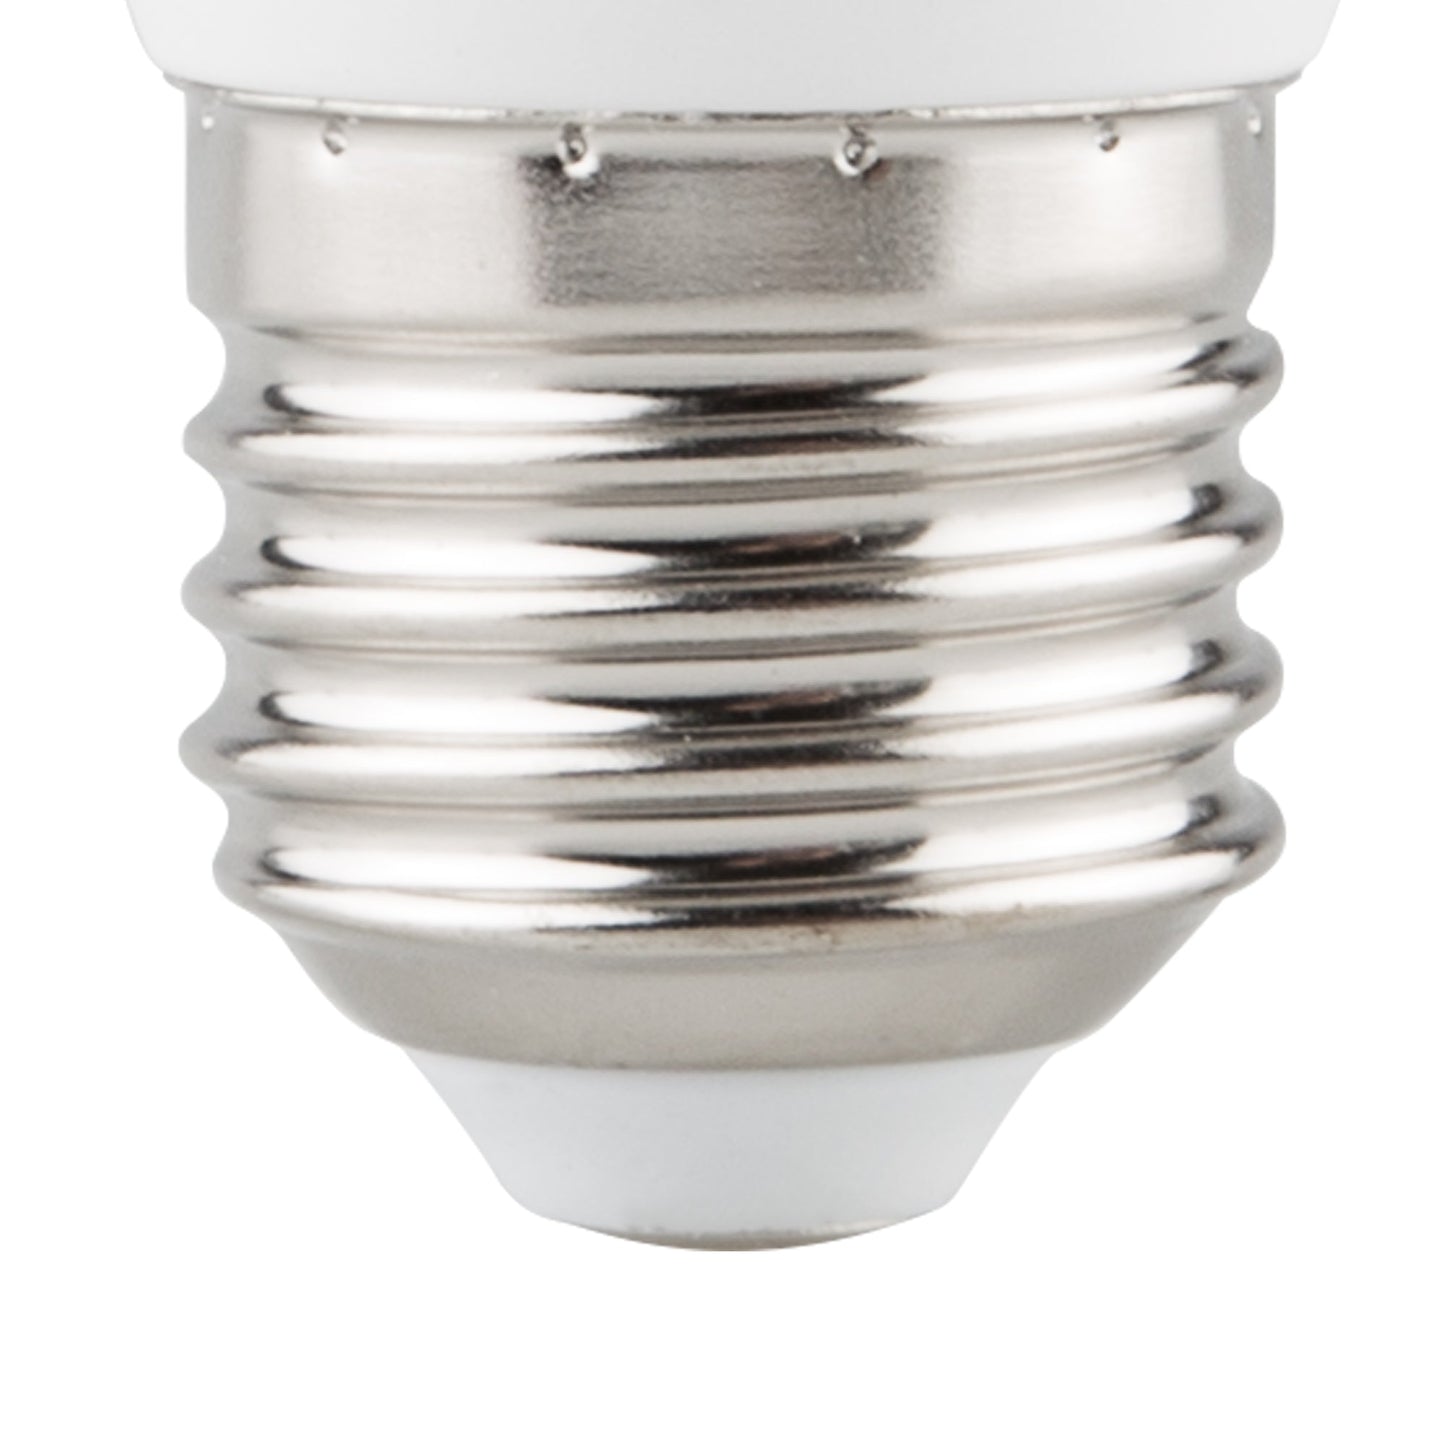 LED REFLECTOR LAMP SAMSUNG E27 R80 12W COLD 